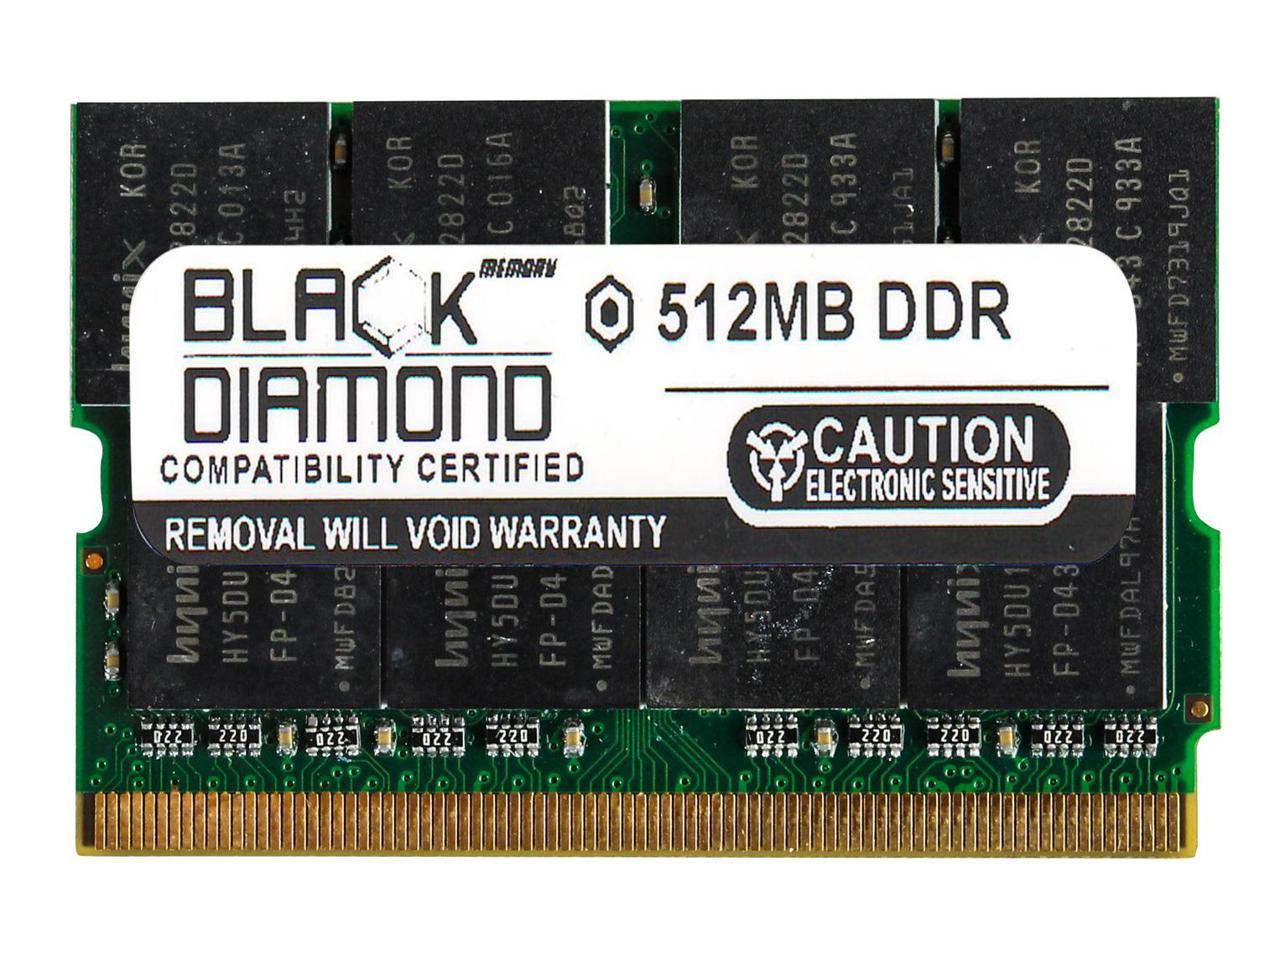 4GB 2X2GB Memory RAM for Tyan S Series Tyan S5381WG2NR 240pin PC2-5300 667MHz DDR2 UDIMM Black Diamond Memory Module Upgrade 